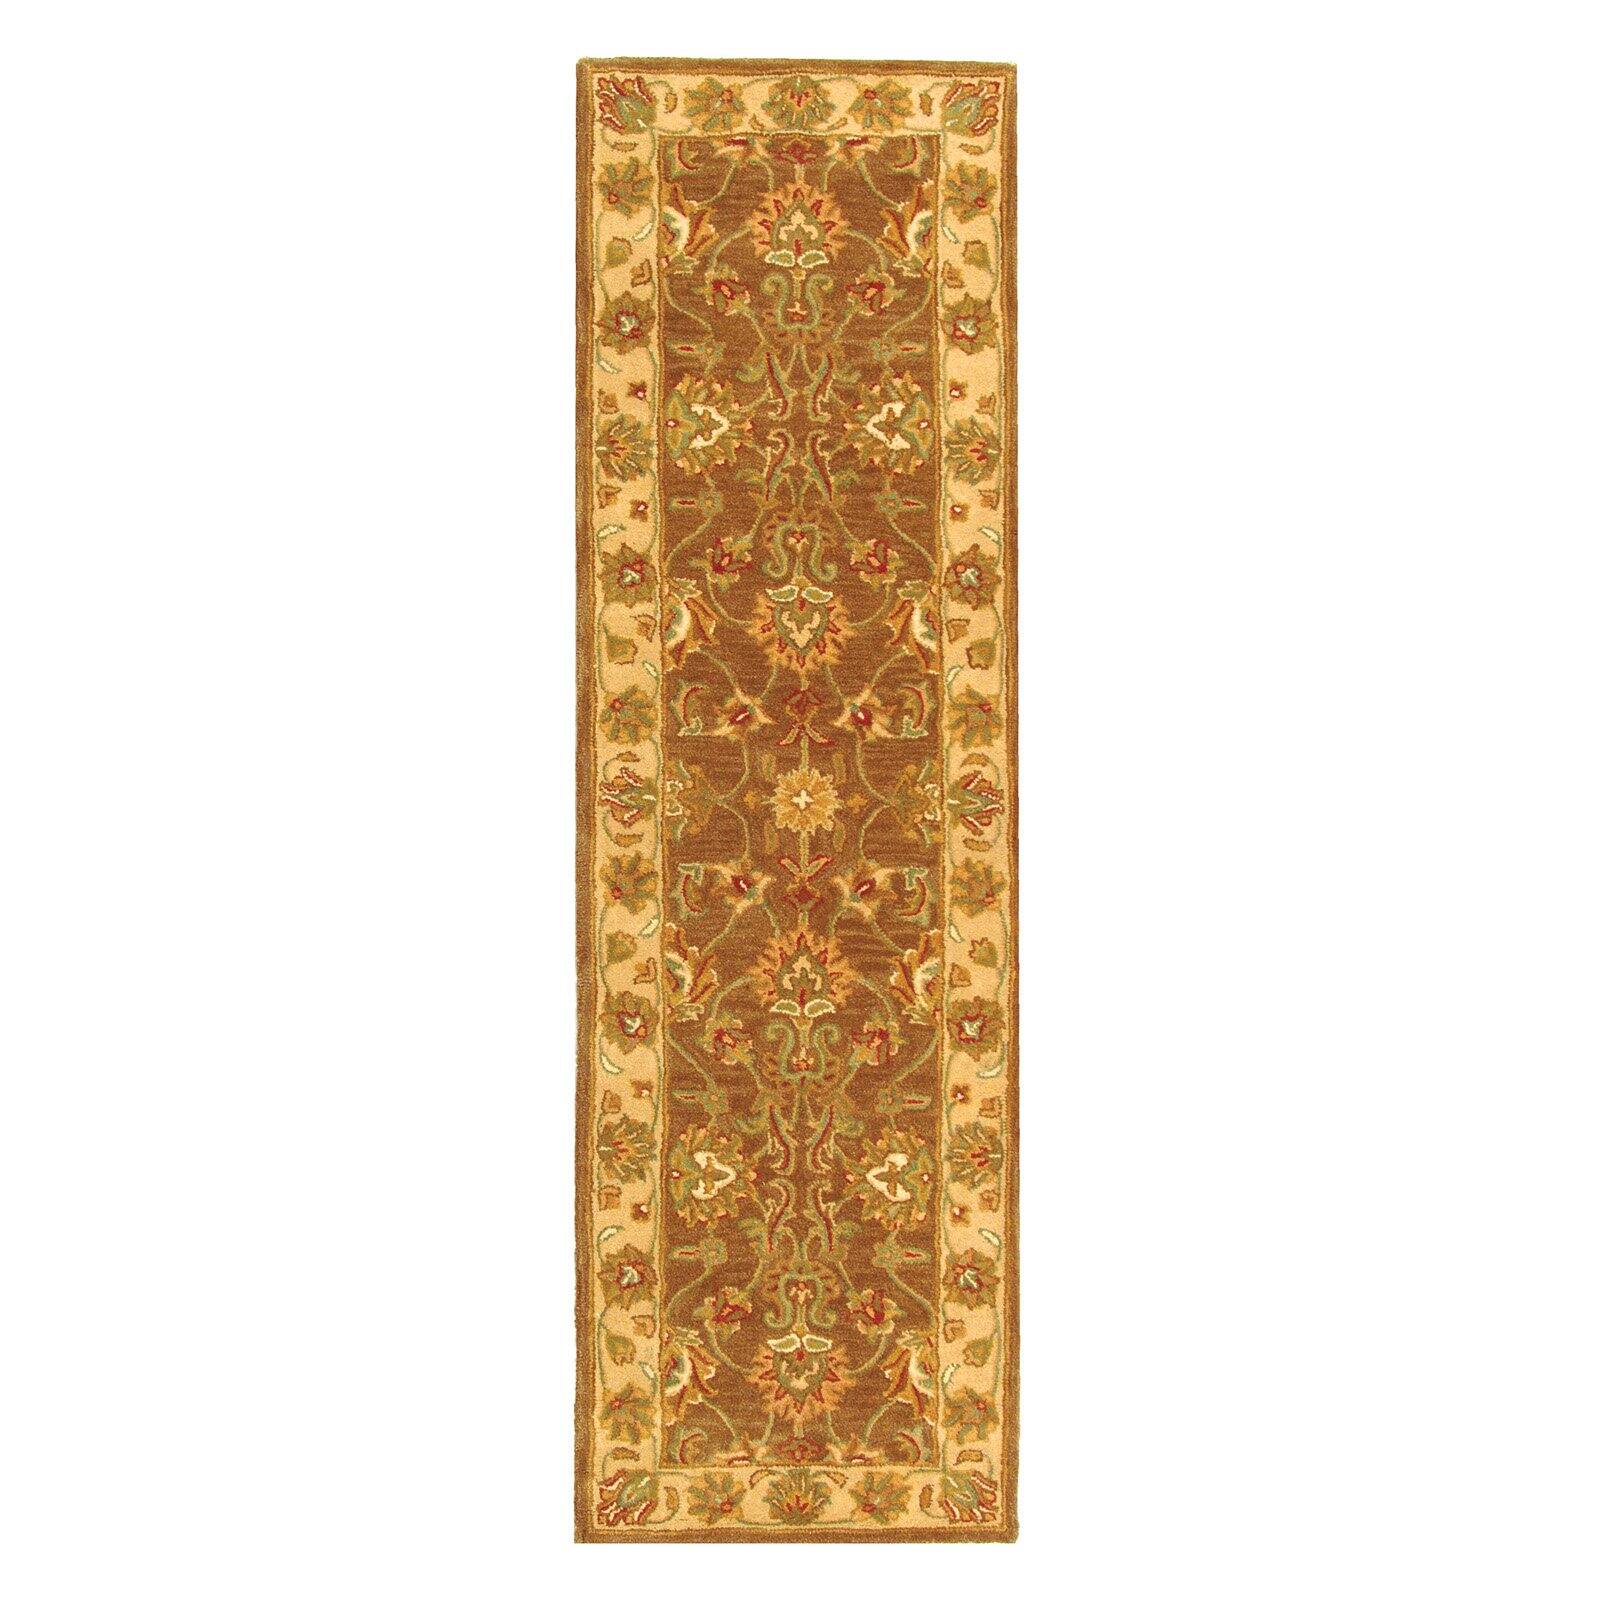 SAFAVIEH Heritage Regis Traditional Wool Area Rug, Brown/Ivory, 9'6" x 13'6" - image 3 of 9